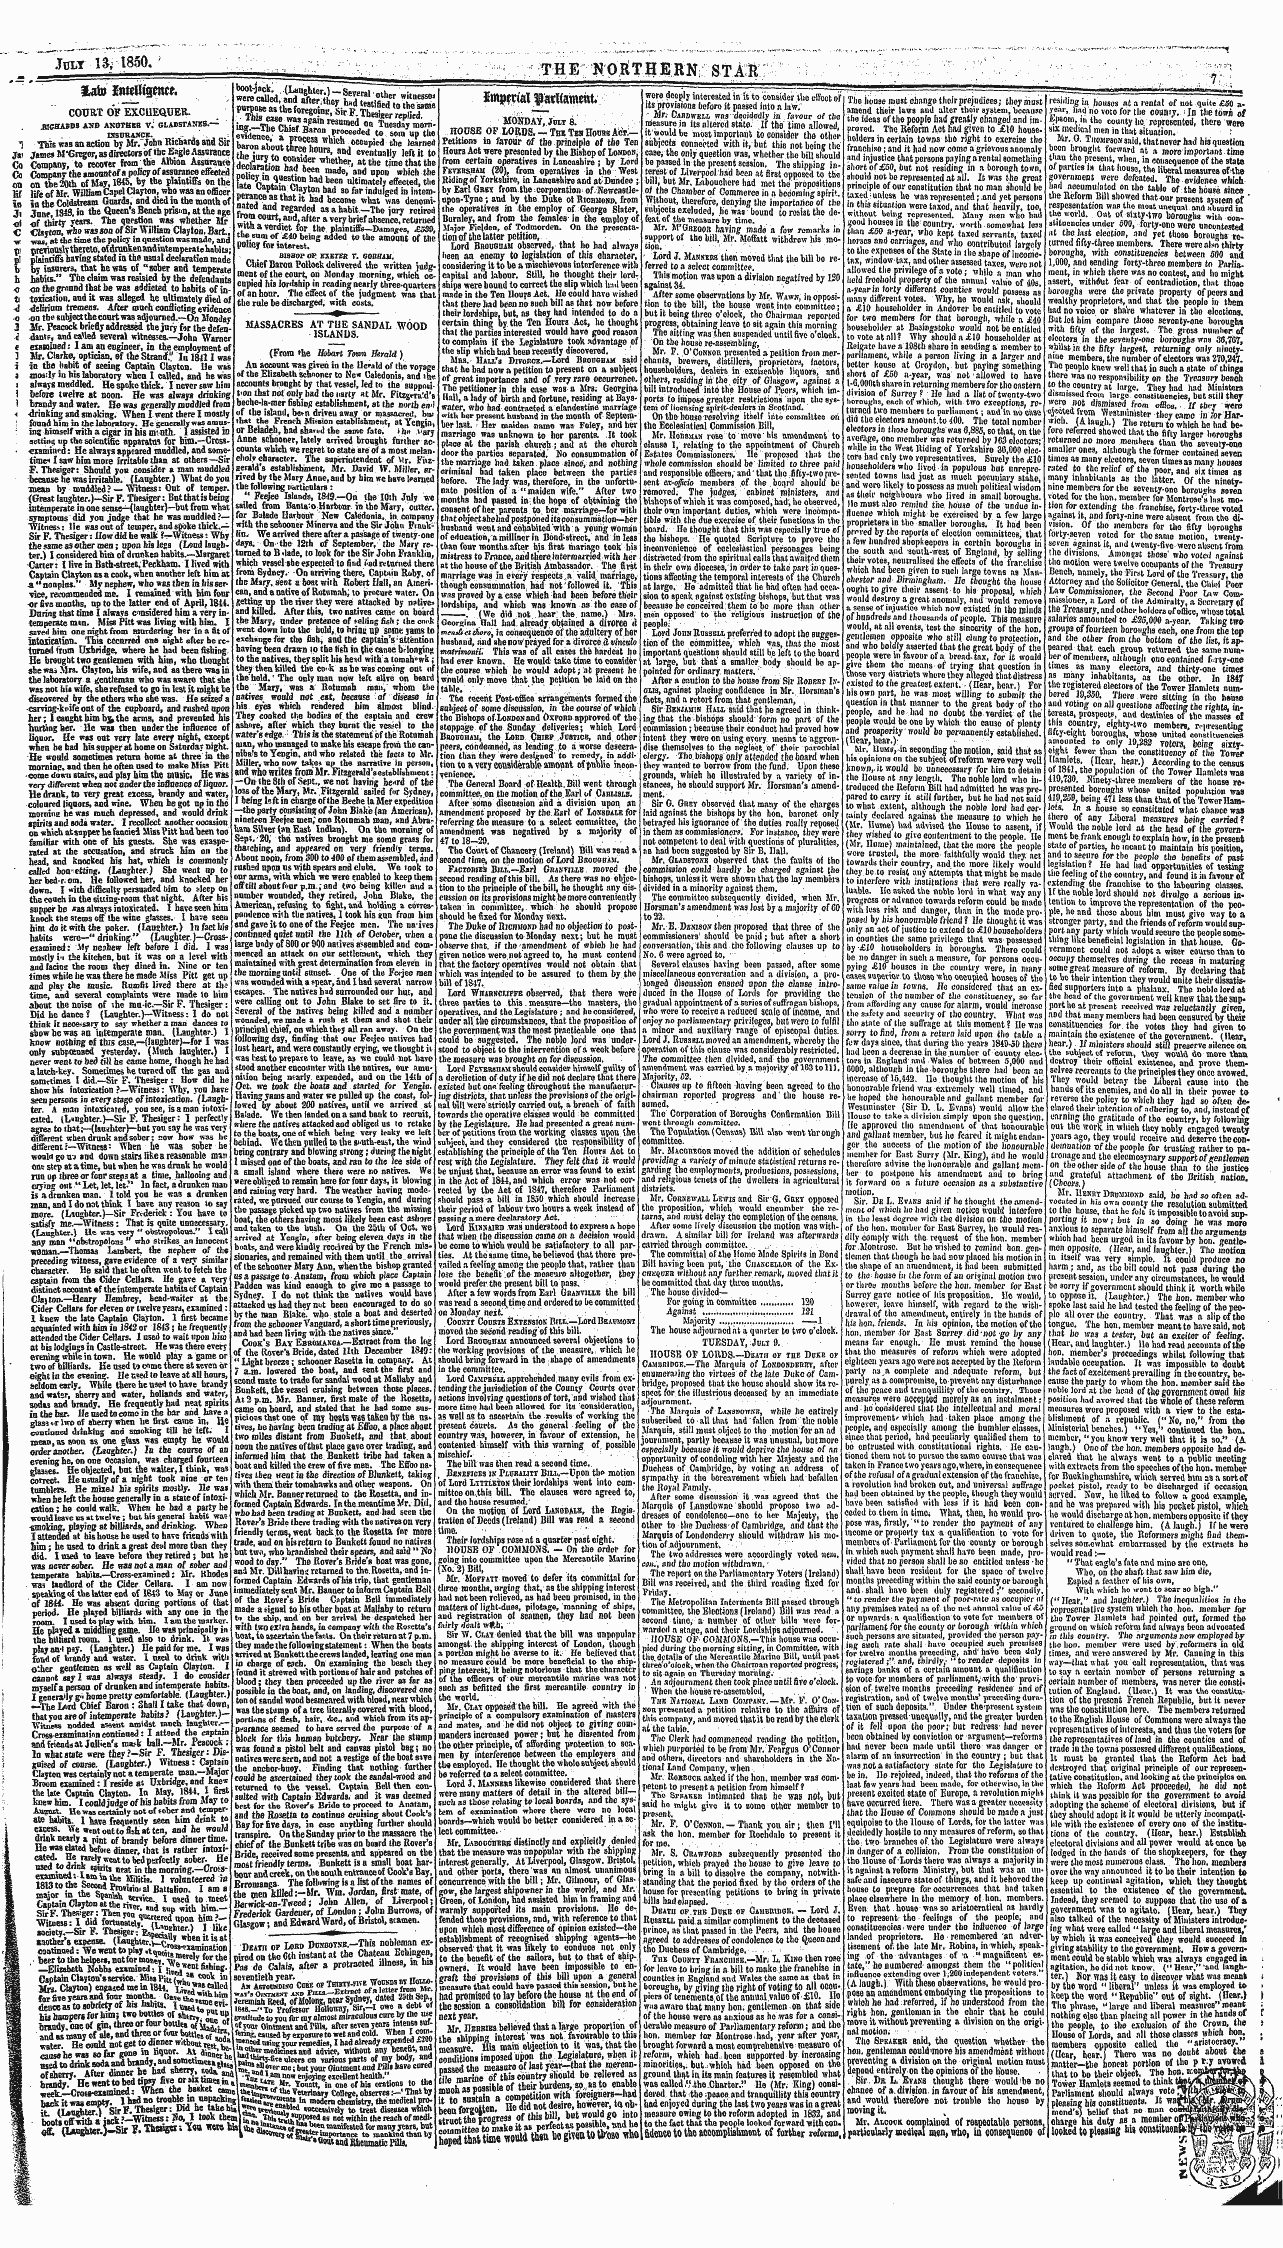 Northern Star (1837-1852): jS F Y, 3rd edition - Iflili ' Fnfelkffttttt. £Ato Jntffutgeitce